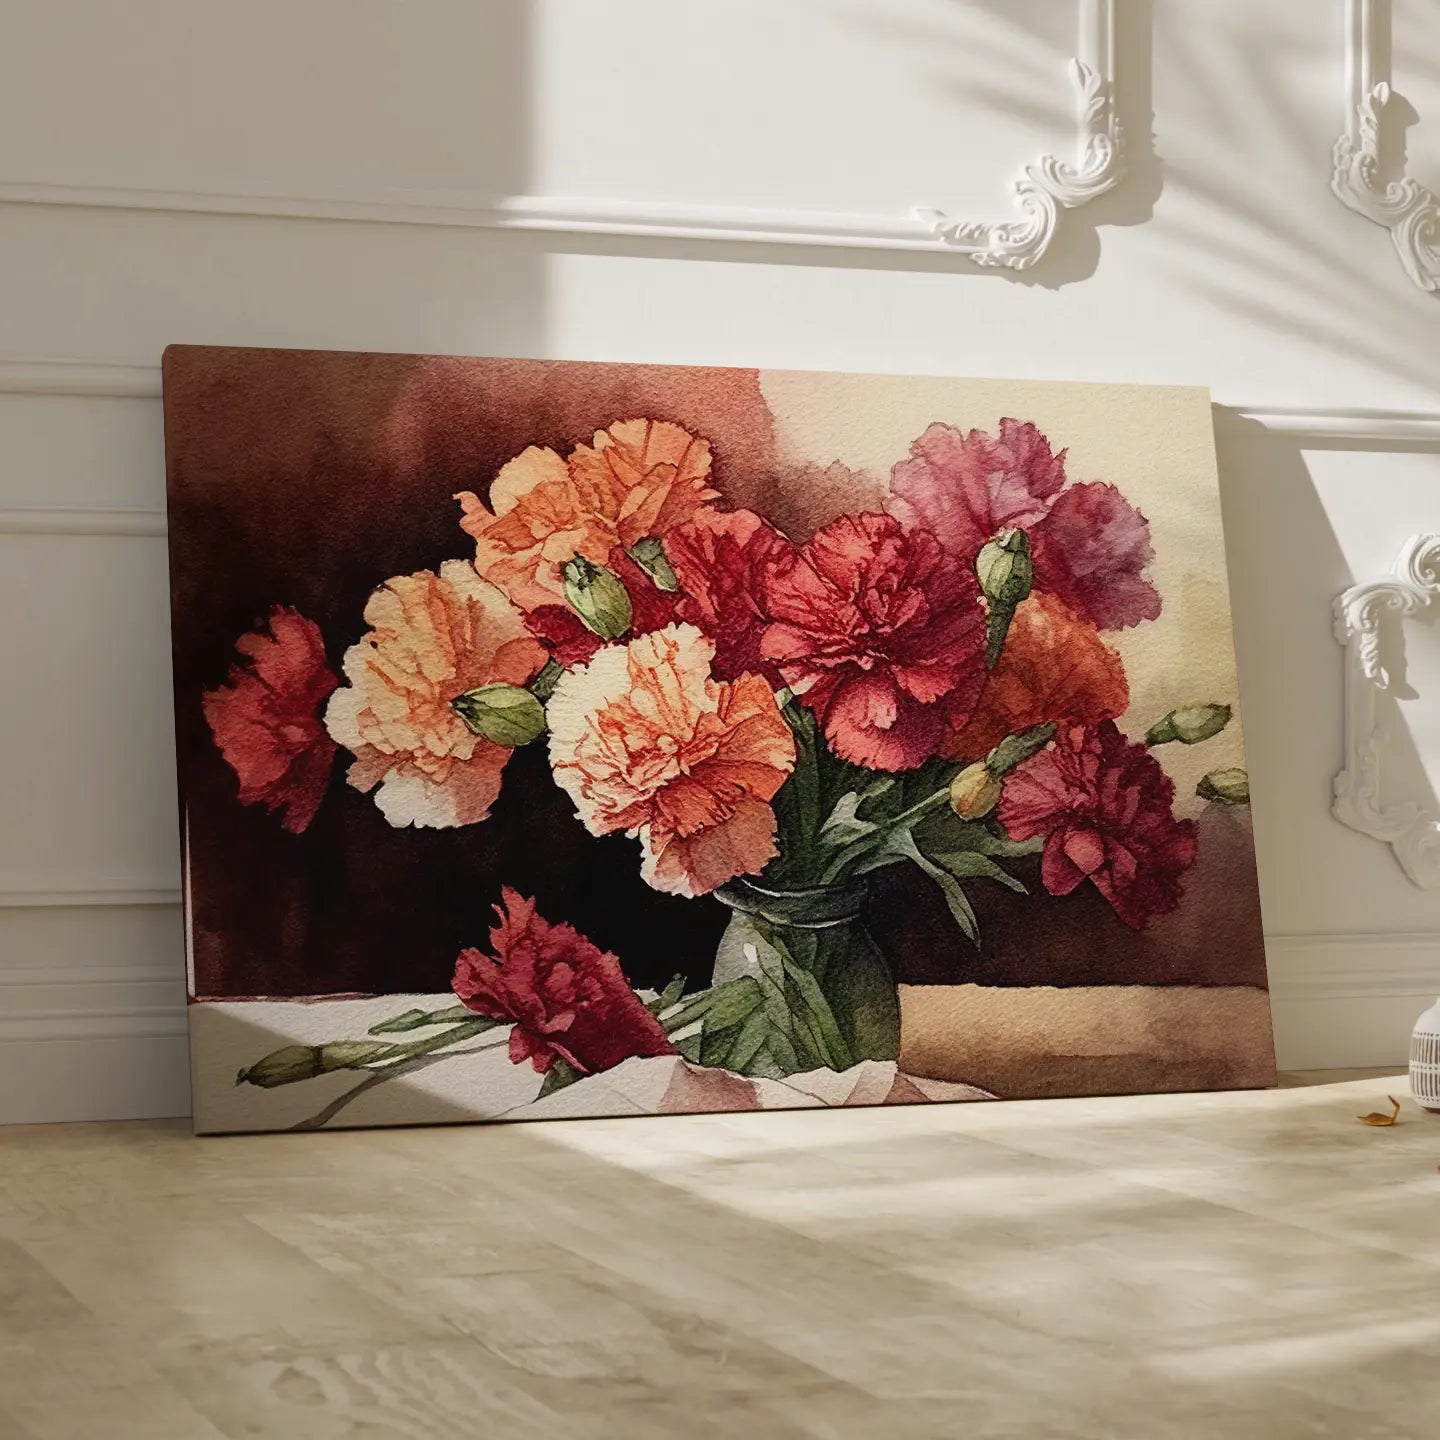 Floral Canvas Wall Art SAD1762